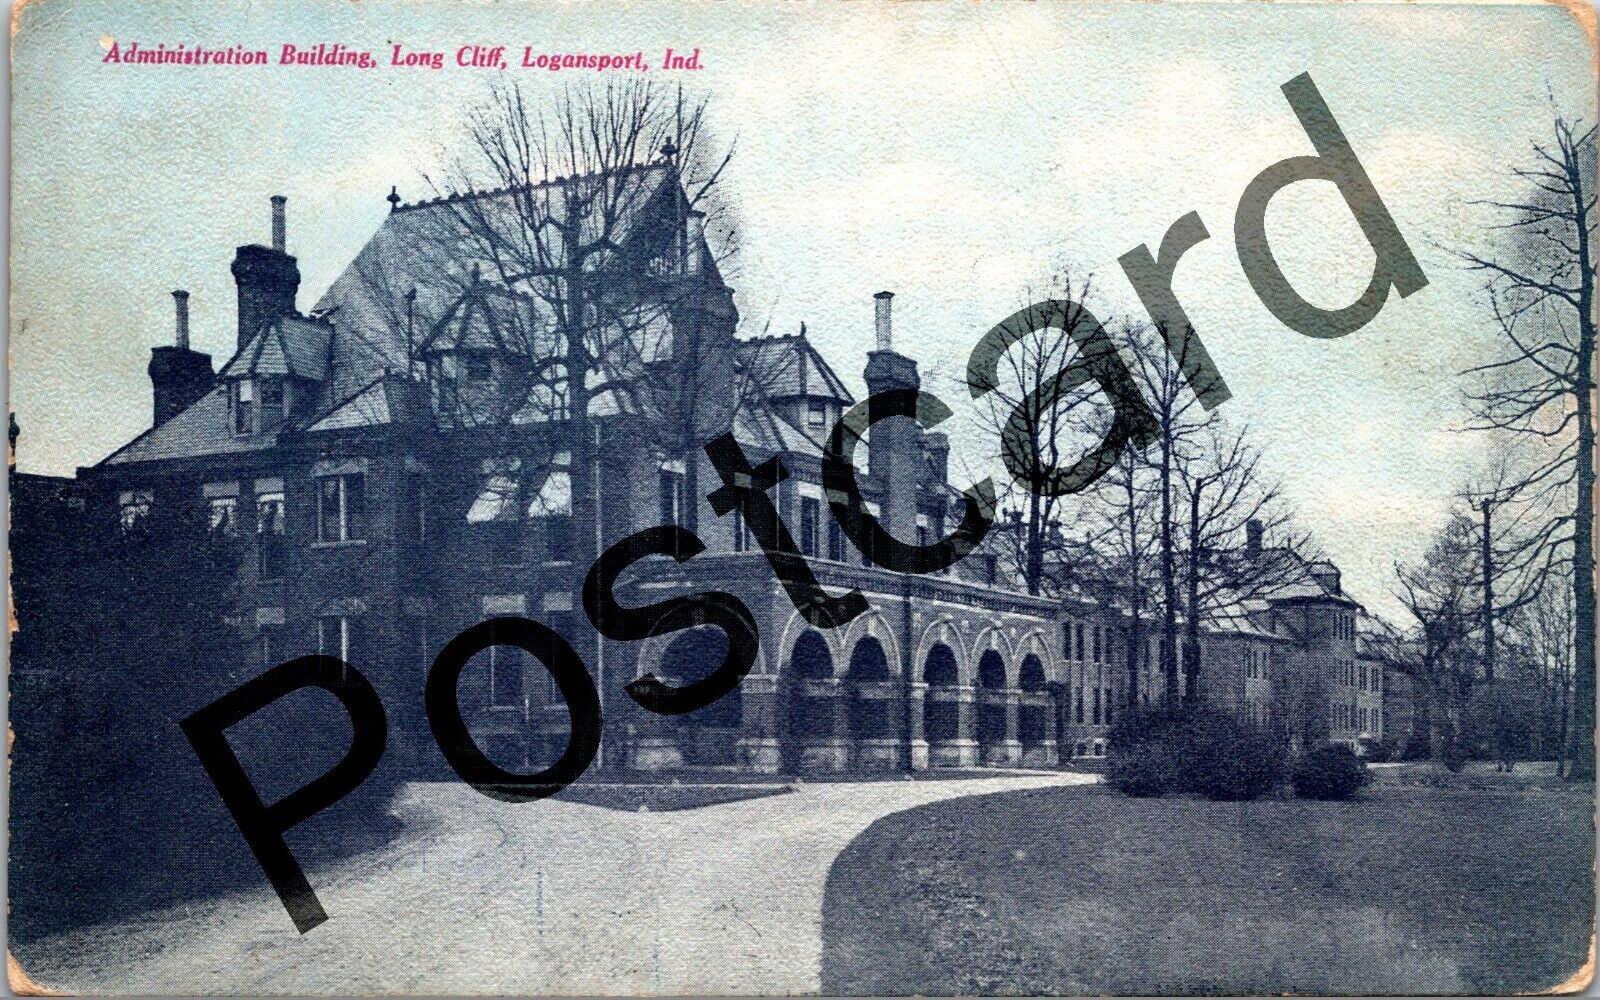 1907 LOGANSPORT IN, Admin Building, Long Cliff,  Callahan postcard jj097